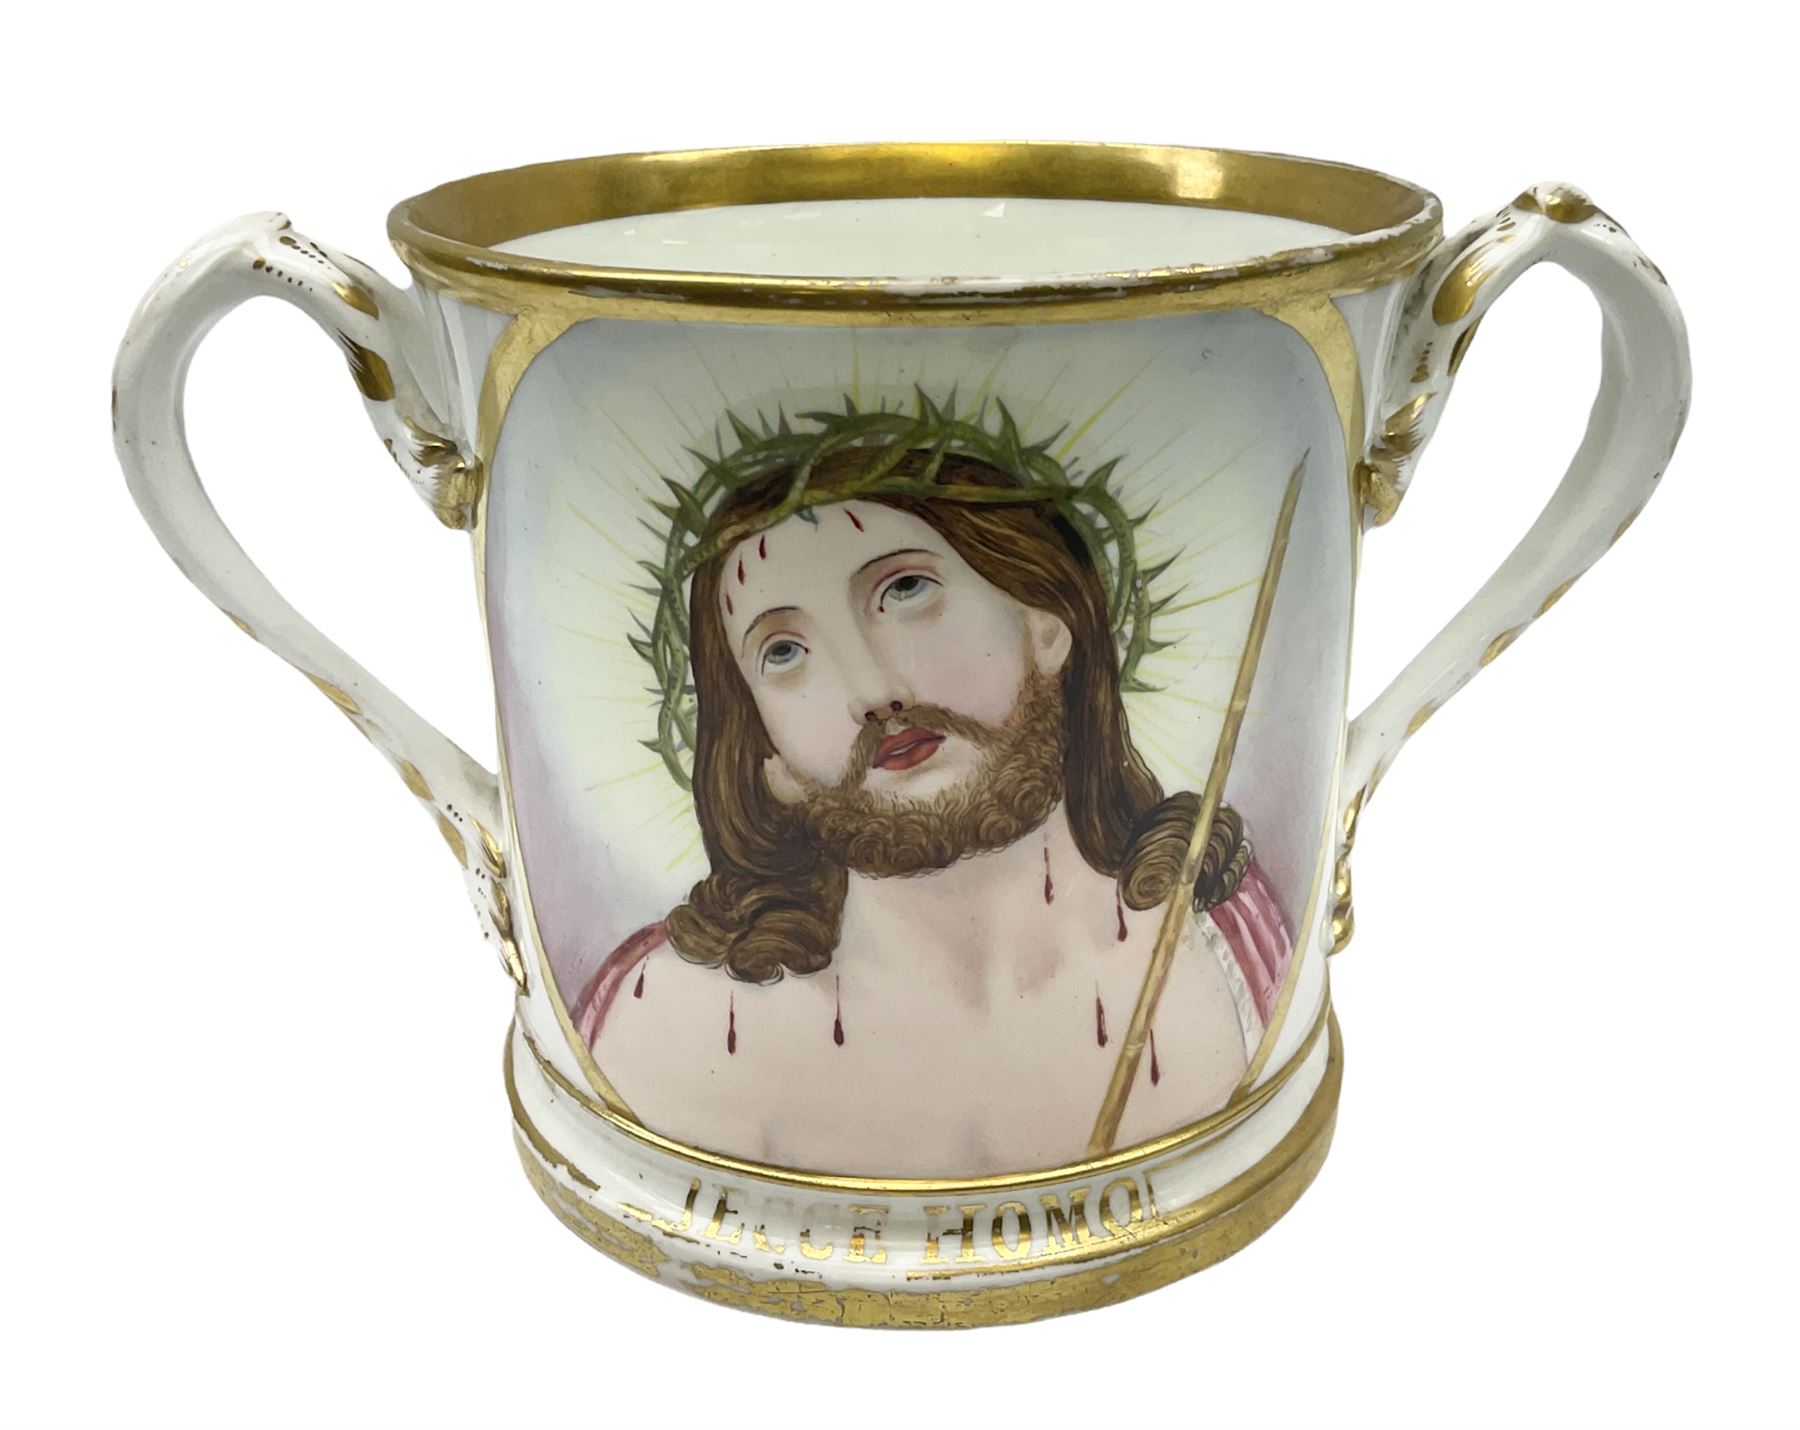 19th century loving cup